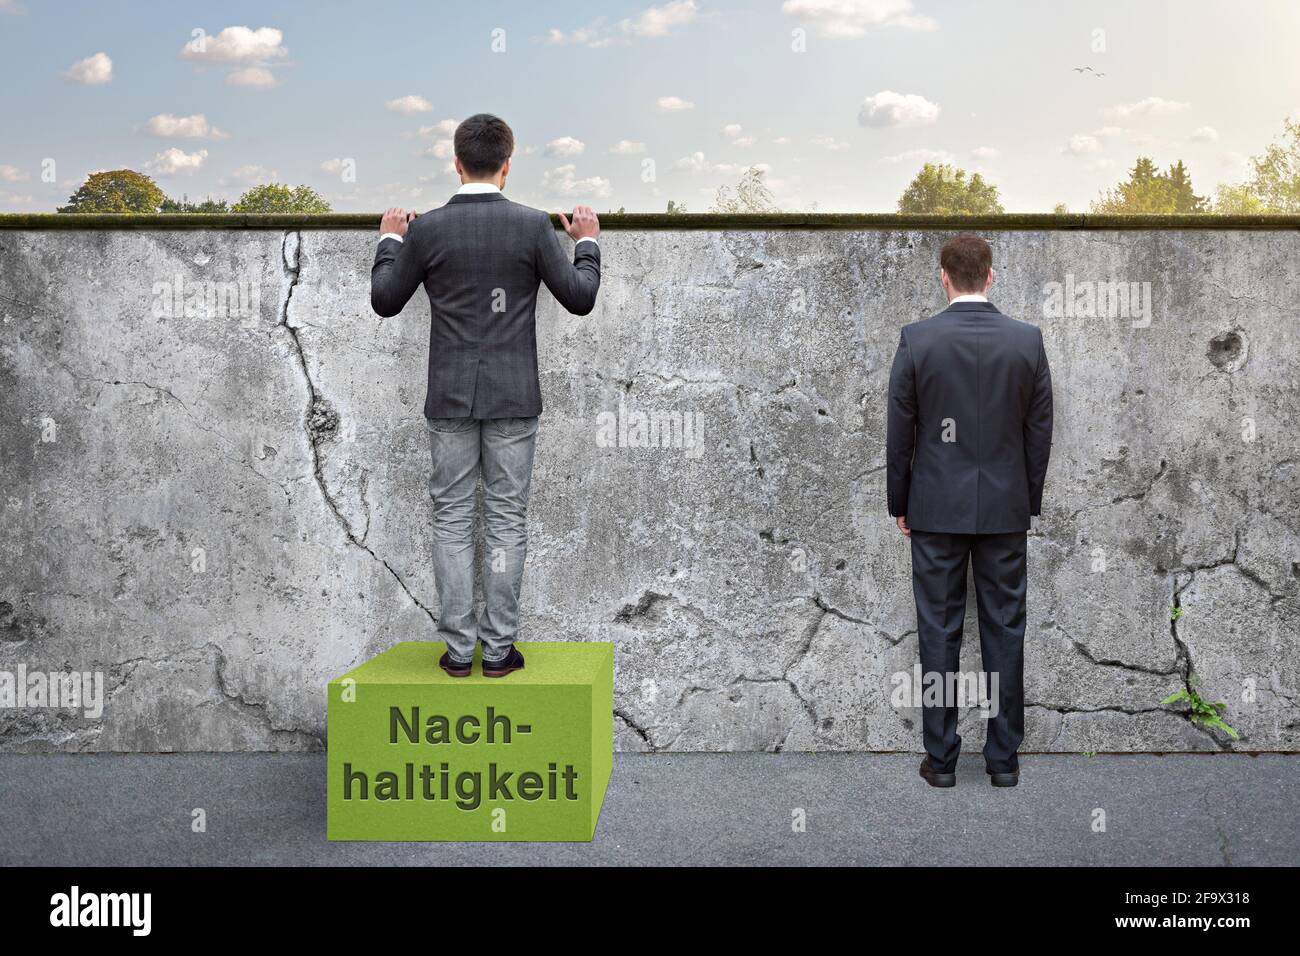 Clever man building on sustainability - awareness metaphor (Nachhaltigkeit = German for sustainability) Stock Photo